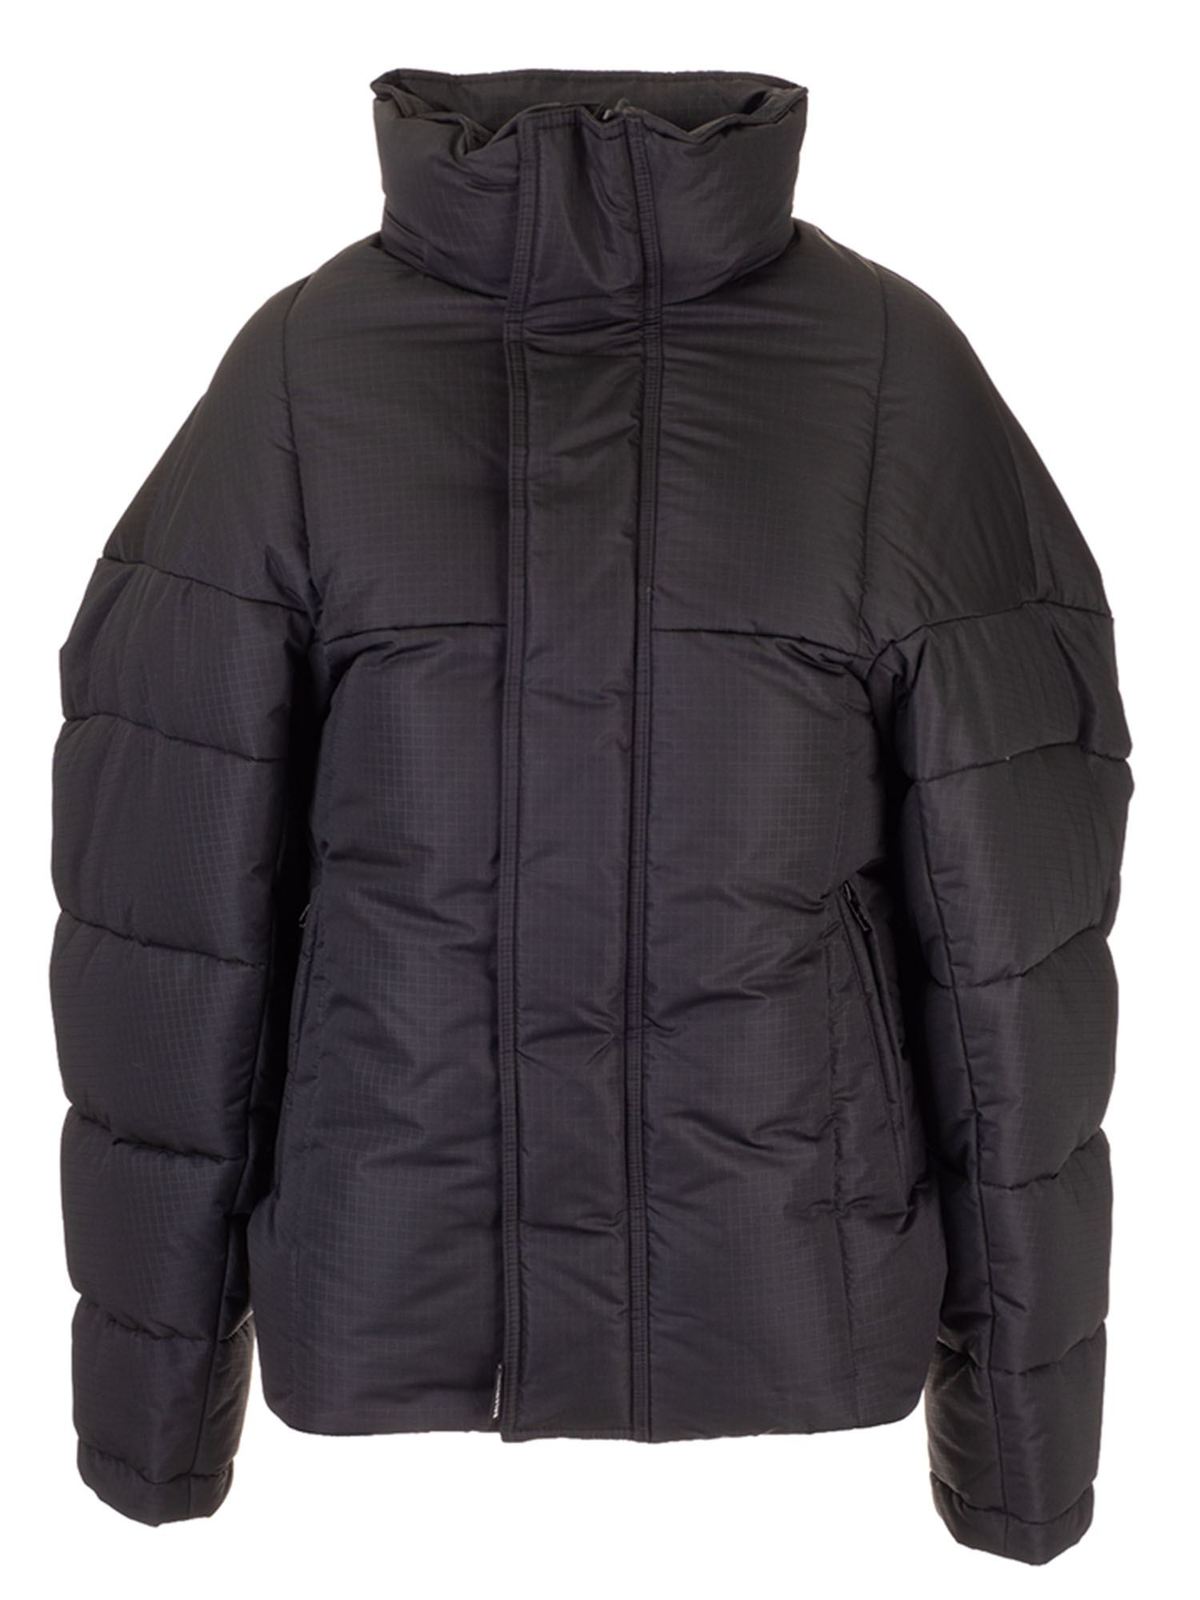 Balenciaga - Upside Down Puffer in black - padded jackets - 626542TYD331000